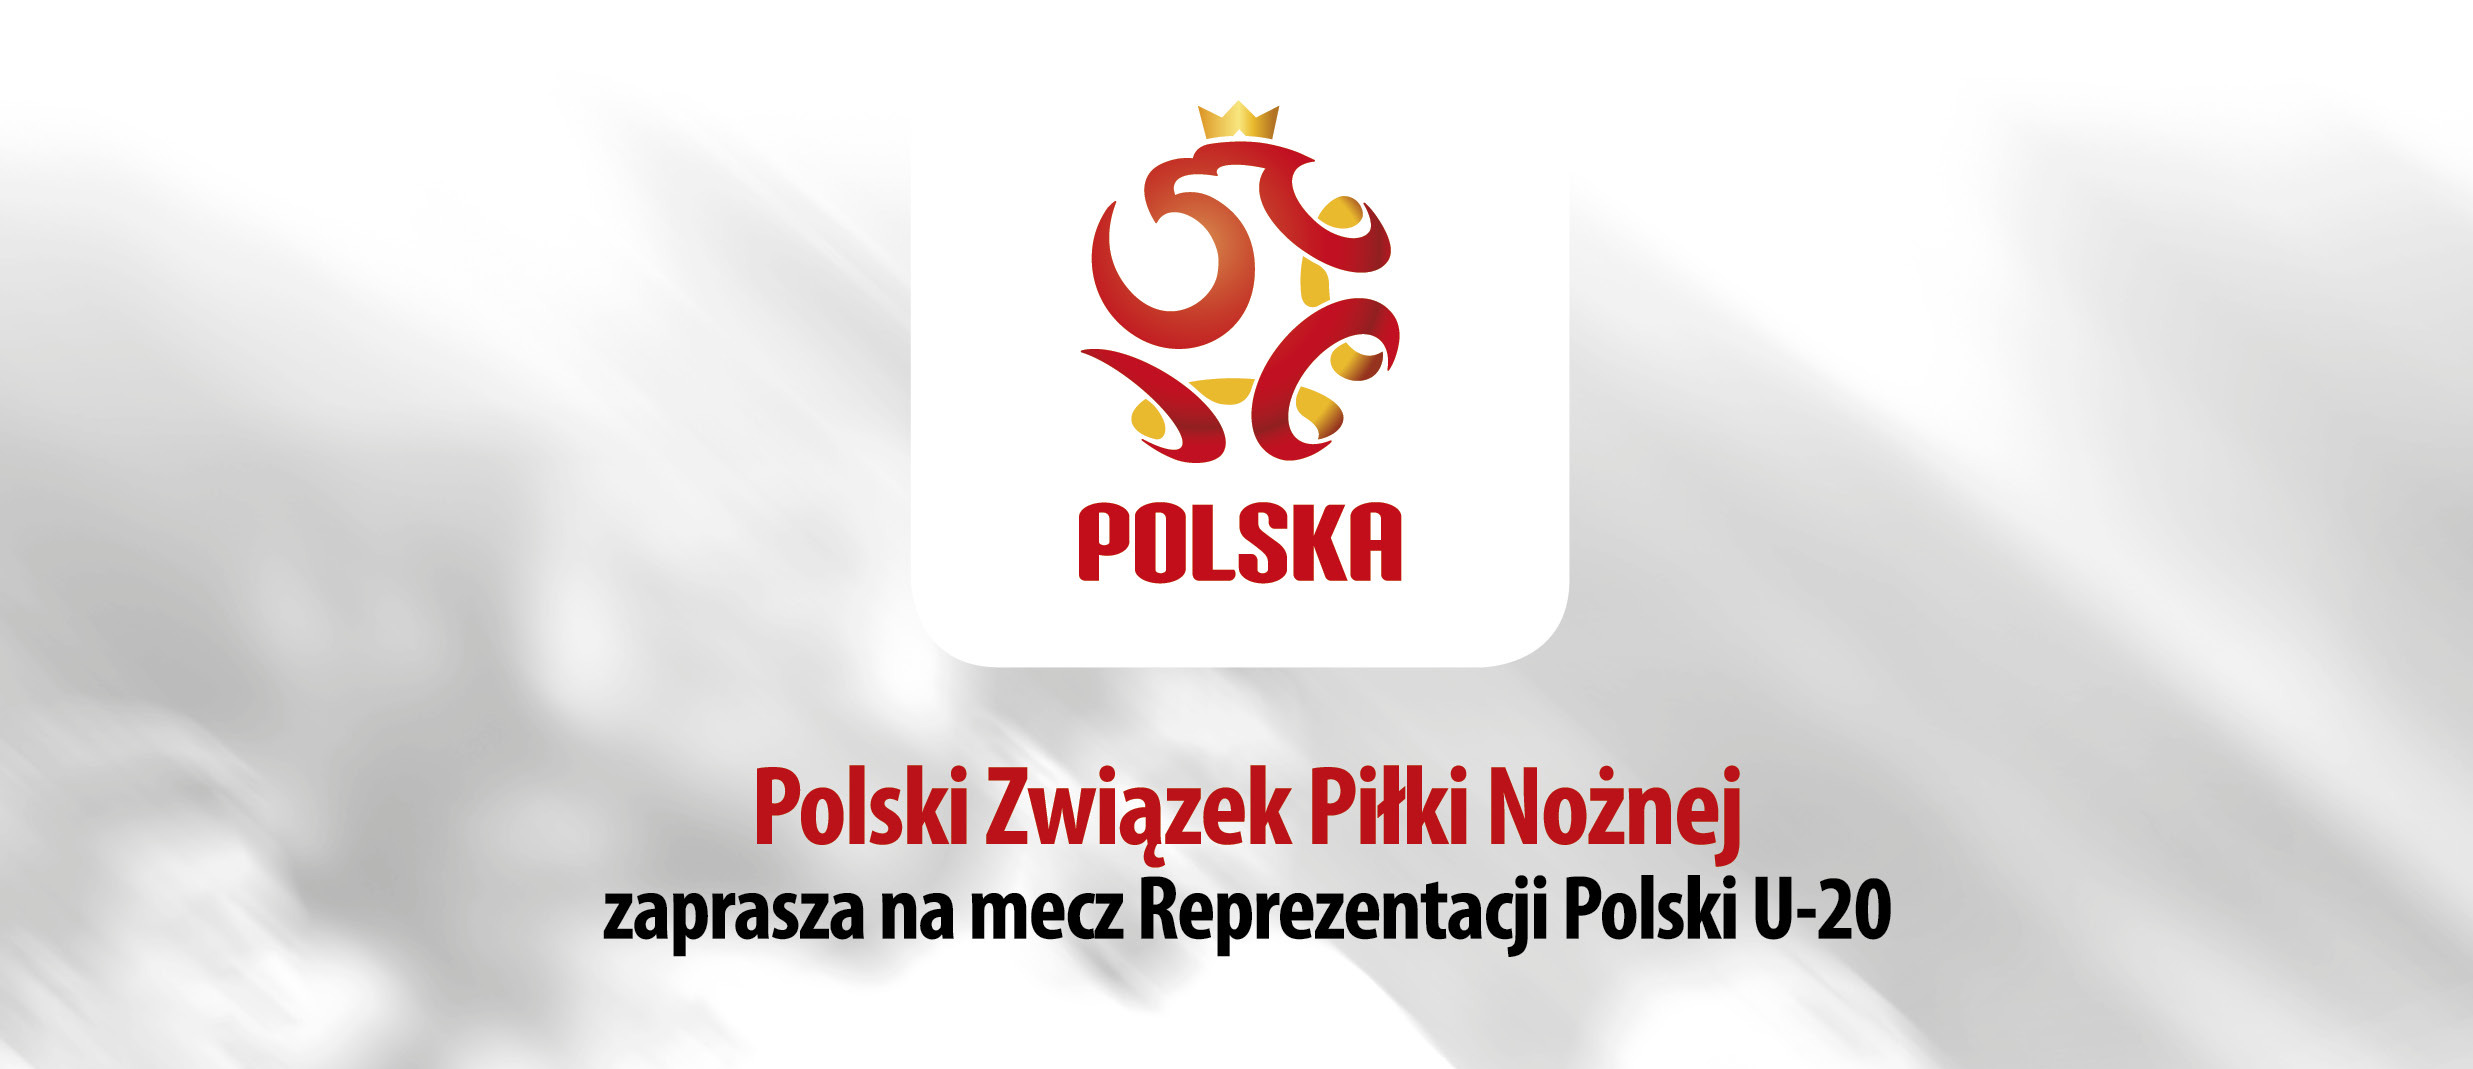 pzpn polska wlochy plakat e1411413235260